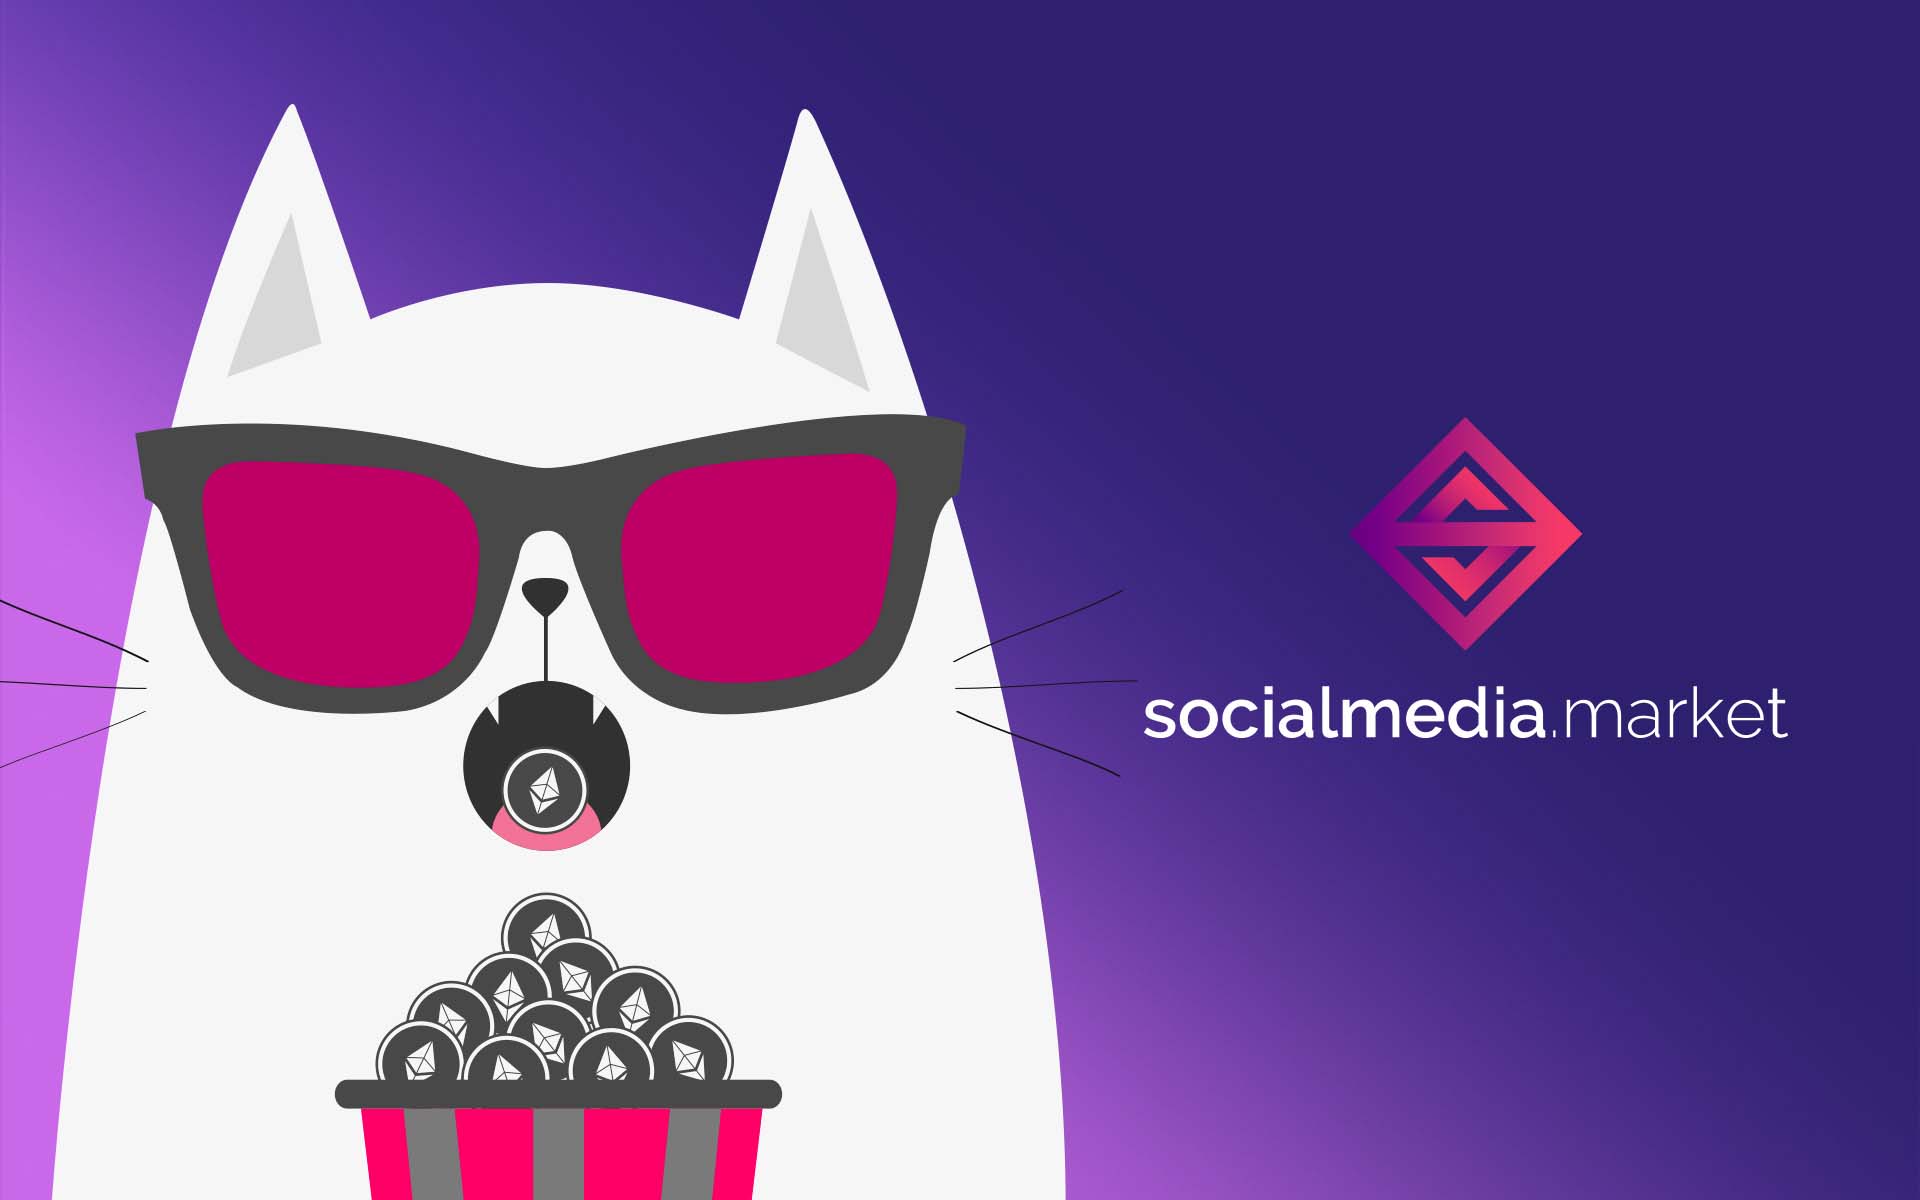 Get Meowed! SocialMedia.Market Rewards Contributors with CryptoKitties